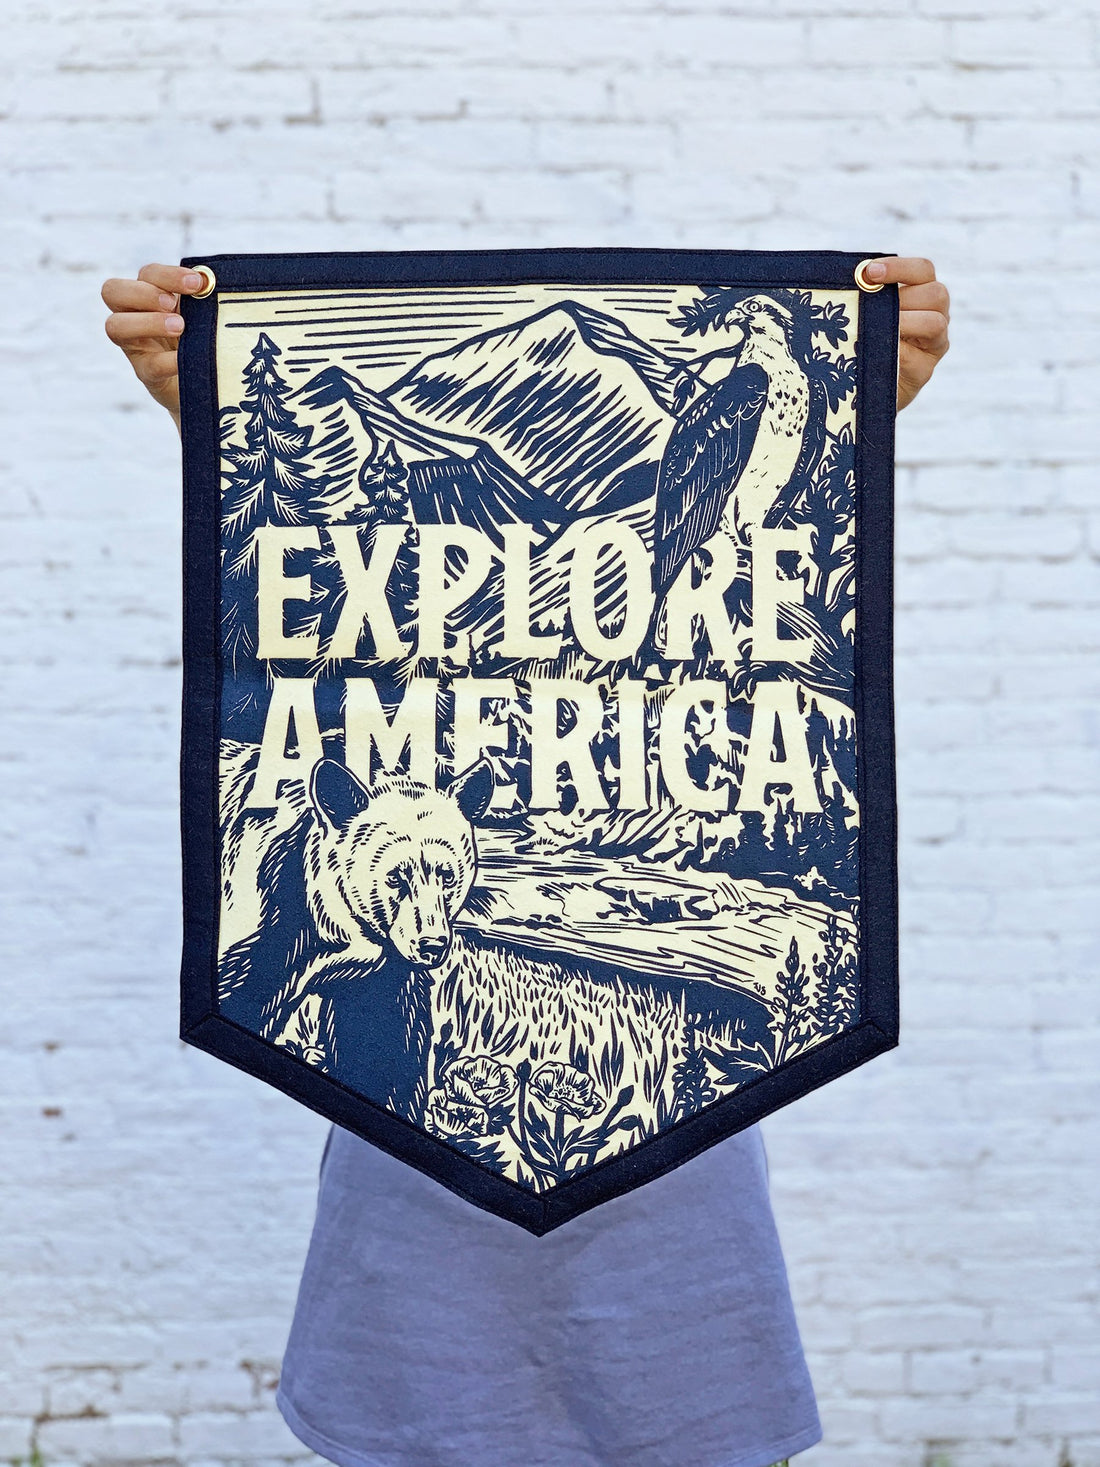 Explore America | Camp Flag